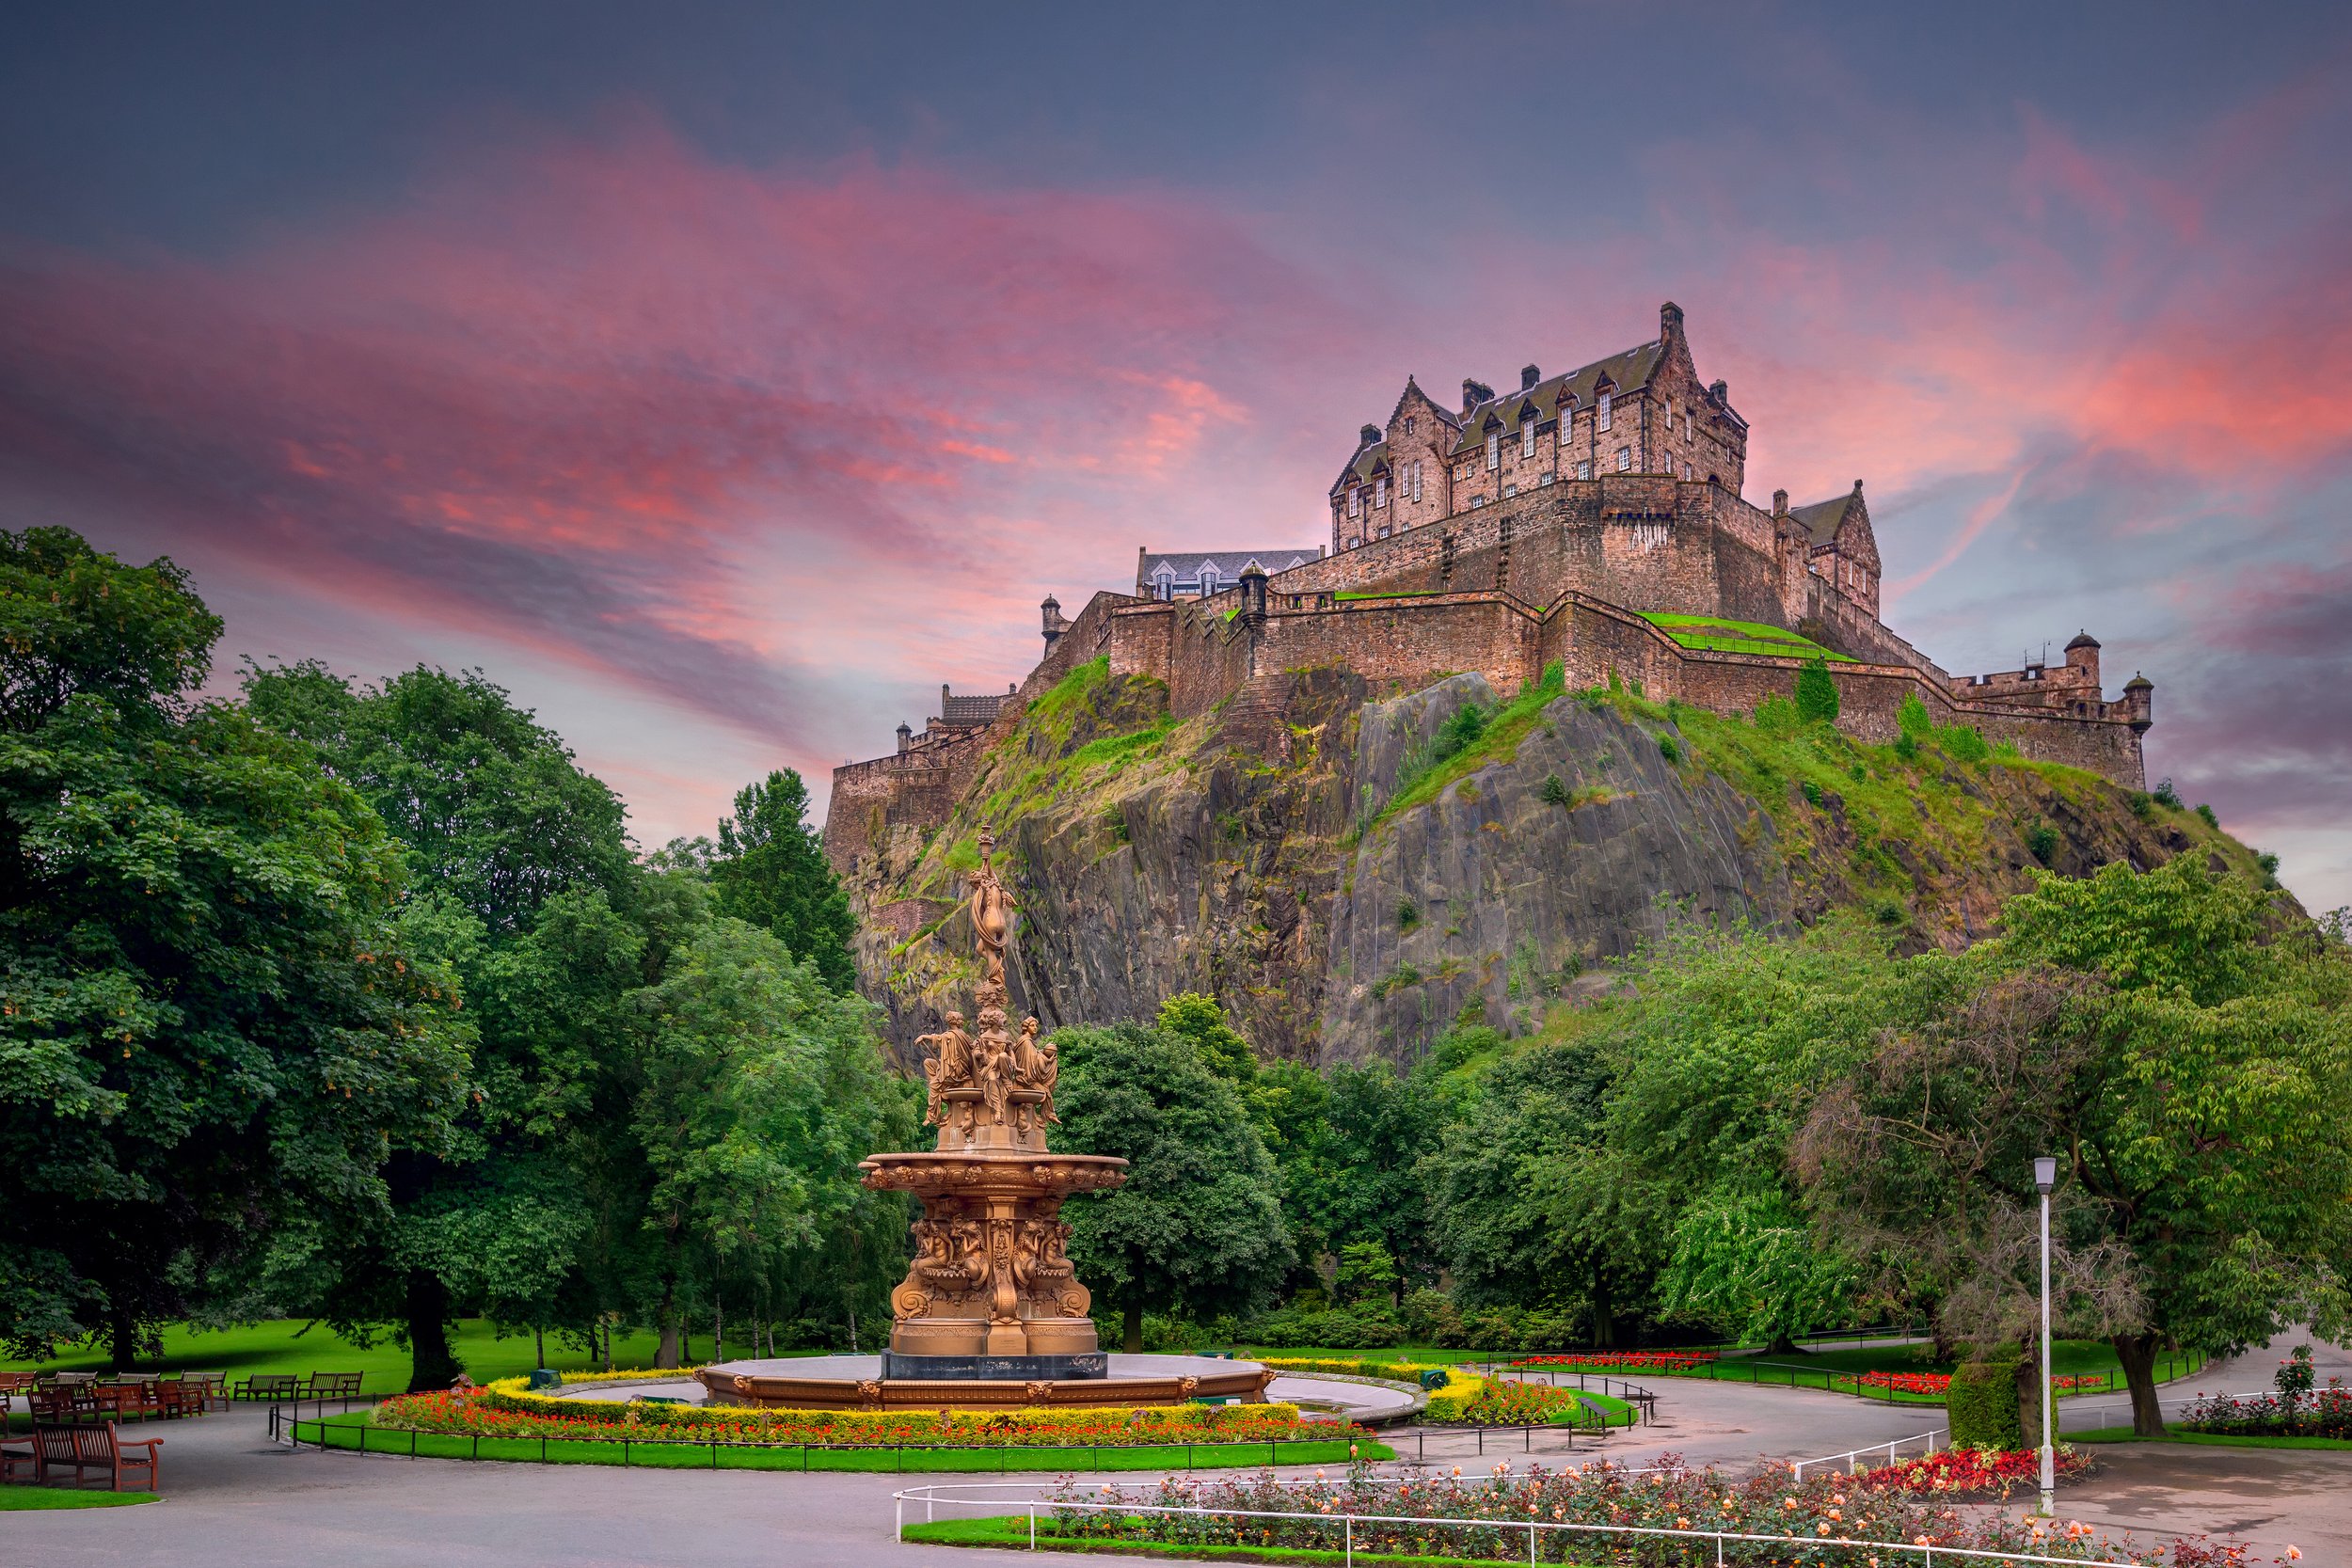 view-on-Edinburgh-Castle-from-Princes-Street-Gardens-Scotland-United-Kingdom-1355634259_4800x3200.jpeg